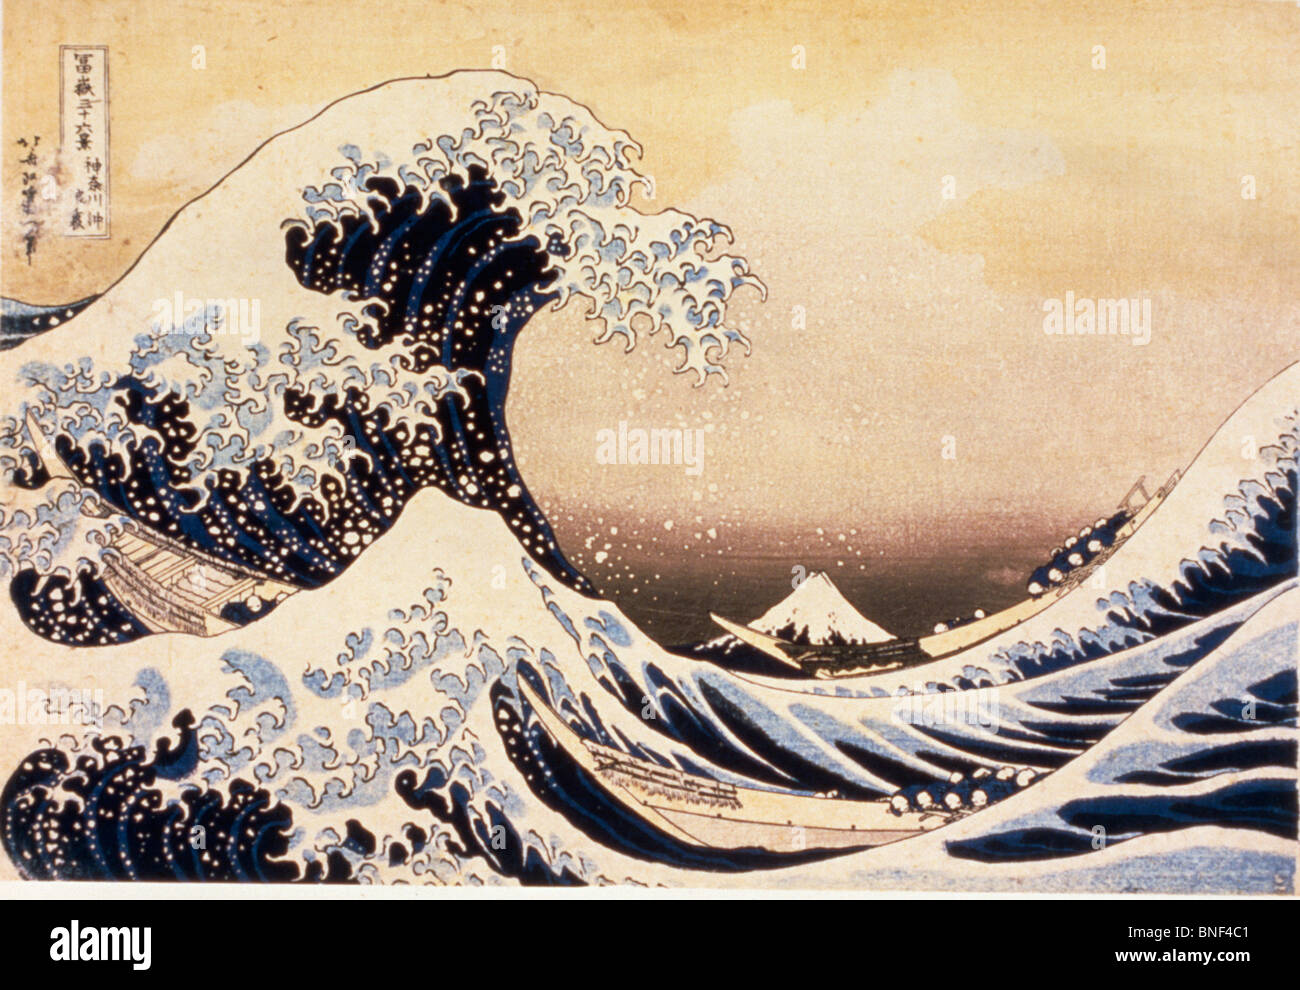 The Great Wave off Kanagawa by Katsushika Hokusai woodblock print Edo Period 19th century 1760-1849 Japan Tokyo National Museum Stock Photo